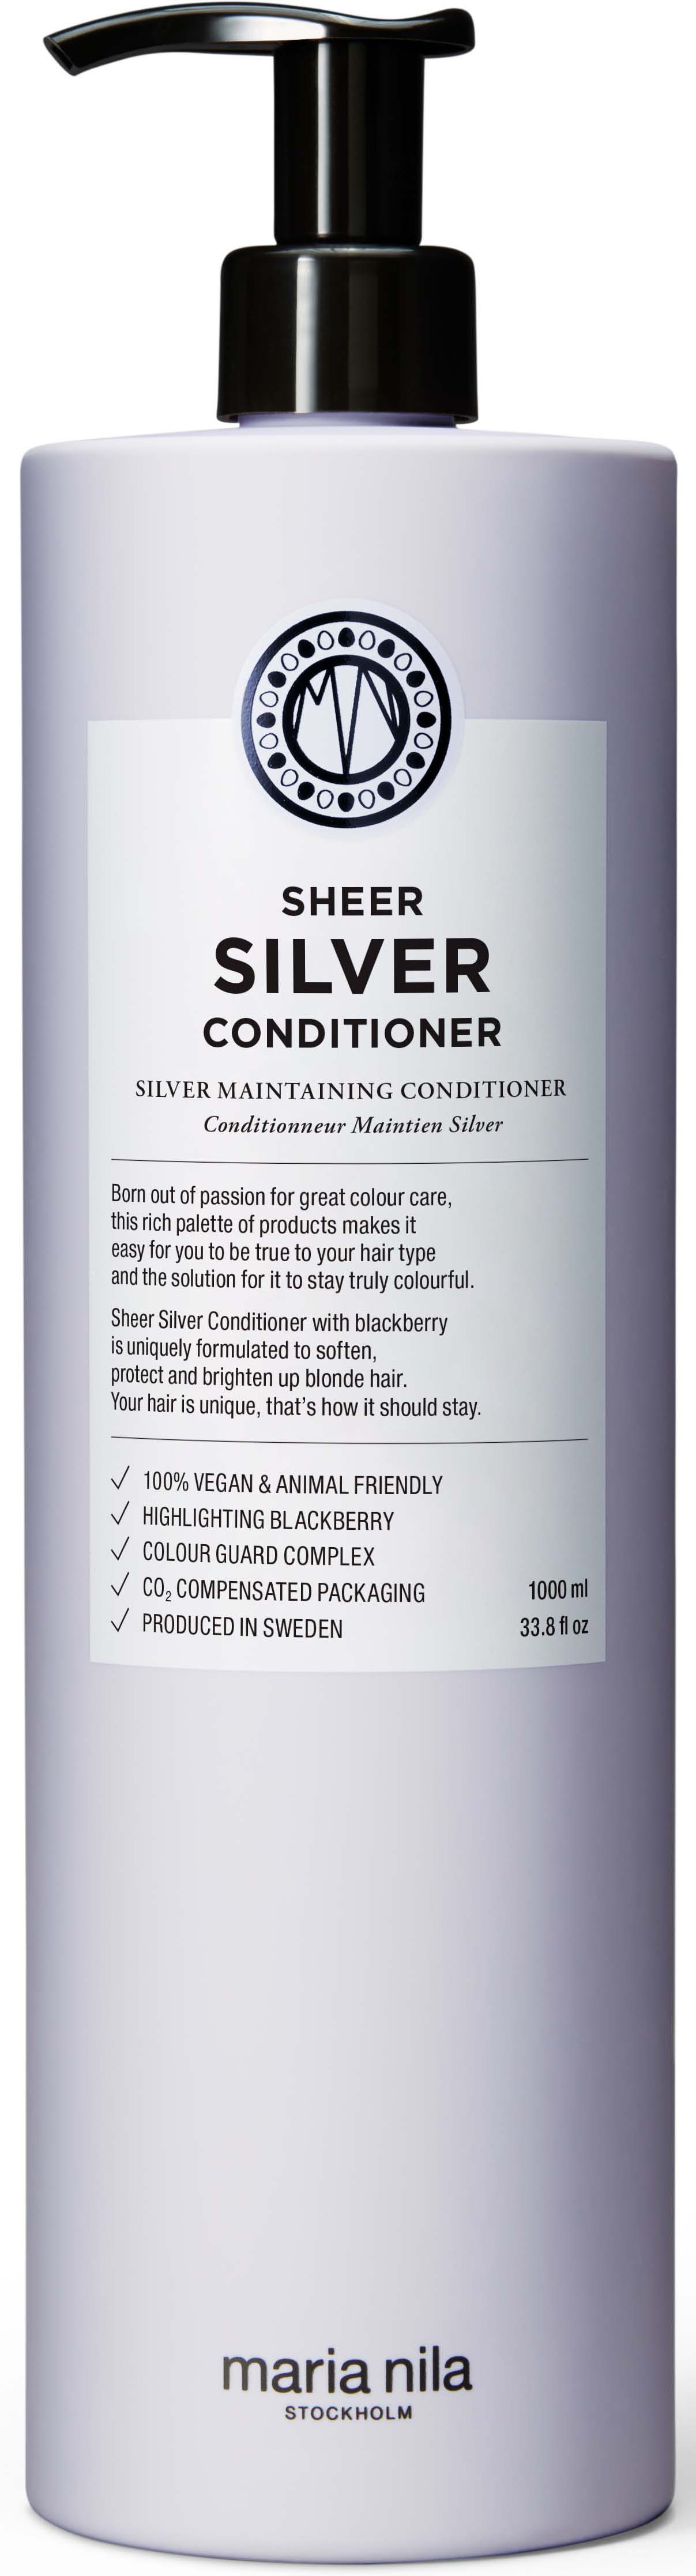 Maria Nila Palett Conditioner Sheer Silver 1000ml